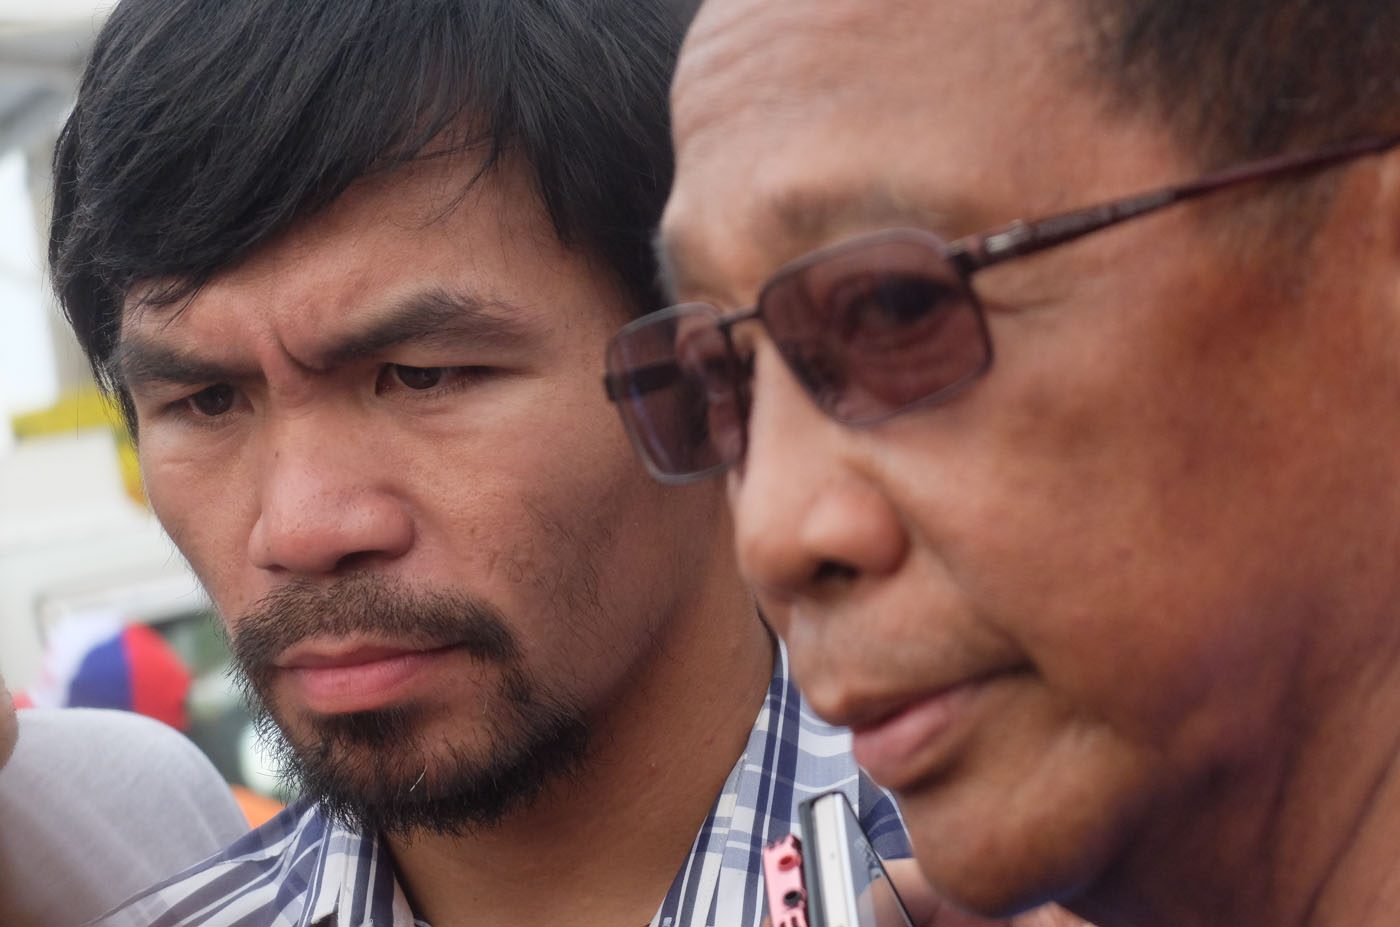 Pacquiao shocked by Abu Sayyaf kidnap plot claim